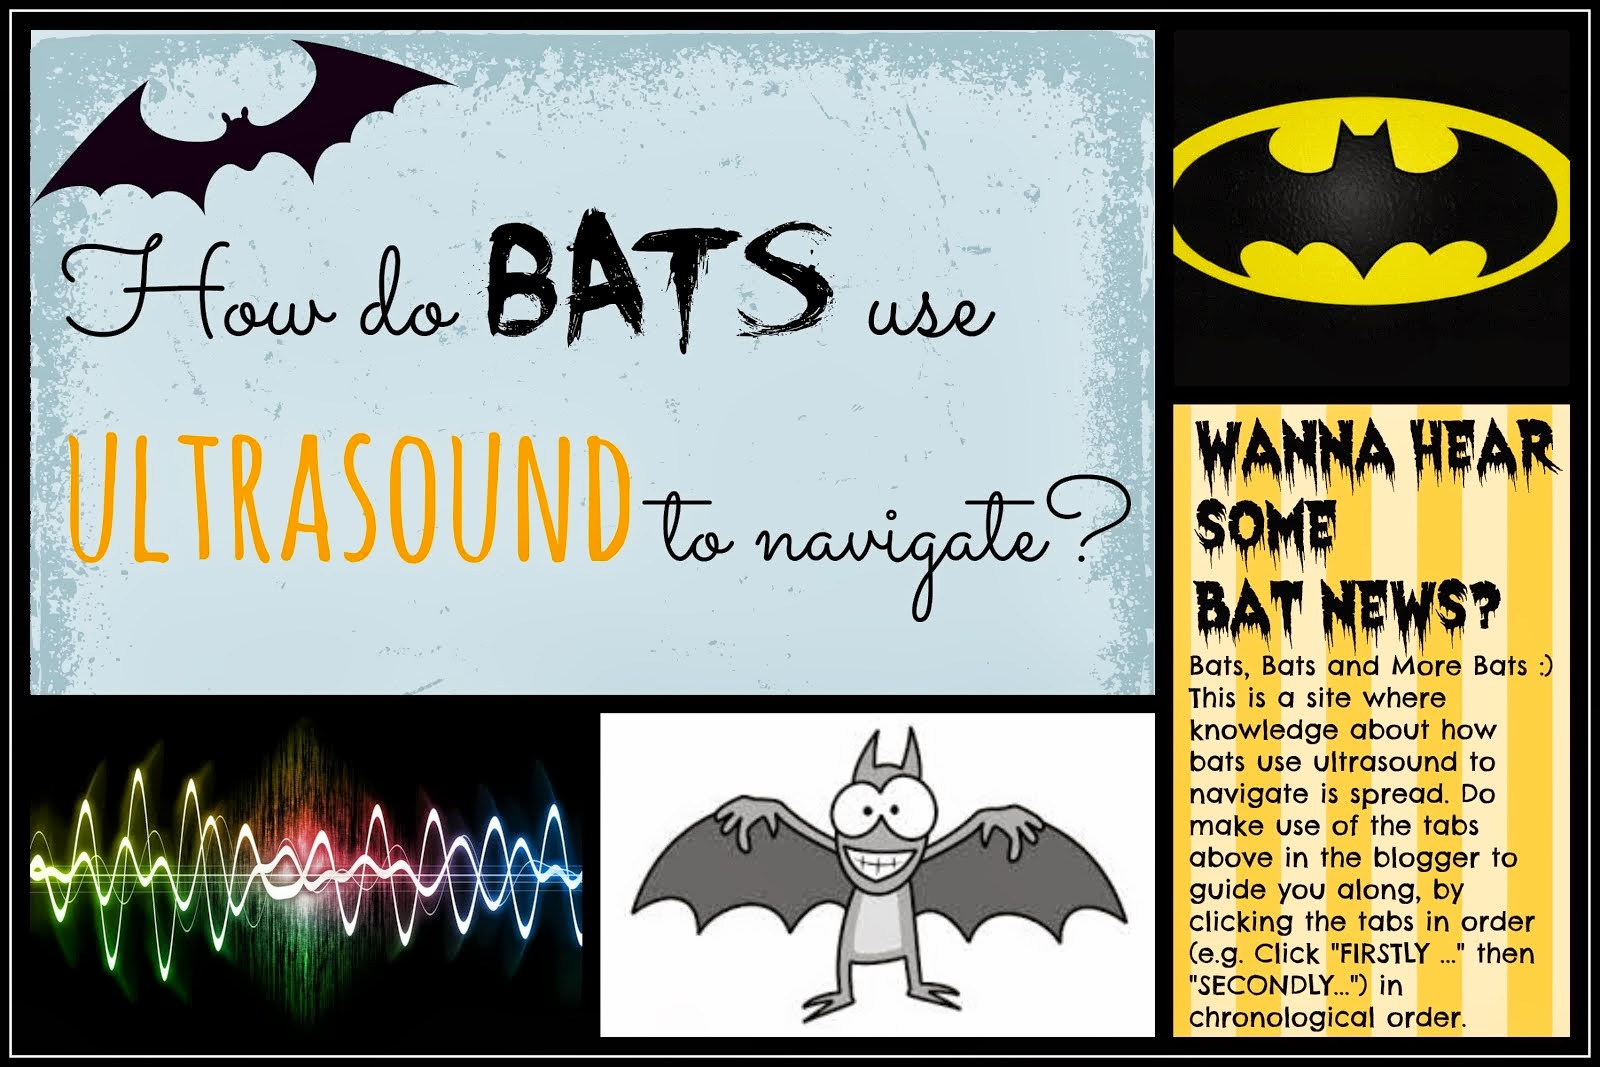 How do bats use ultrasound to navigate? 